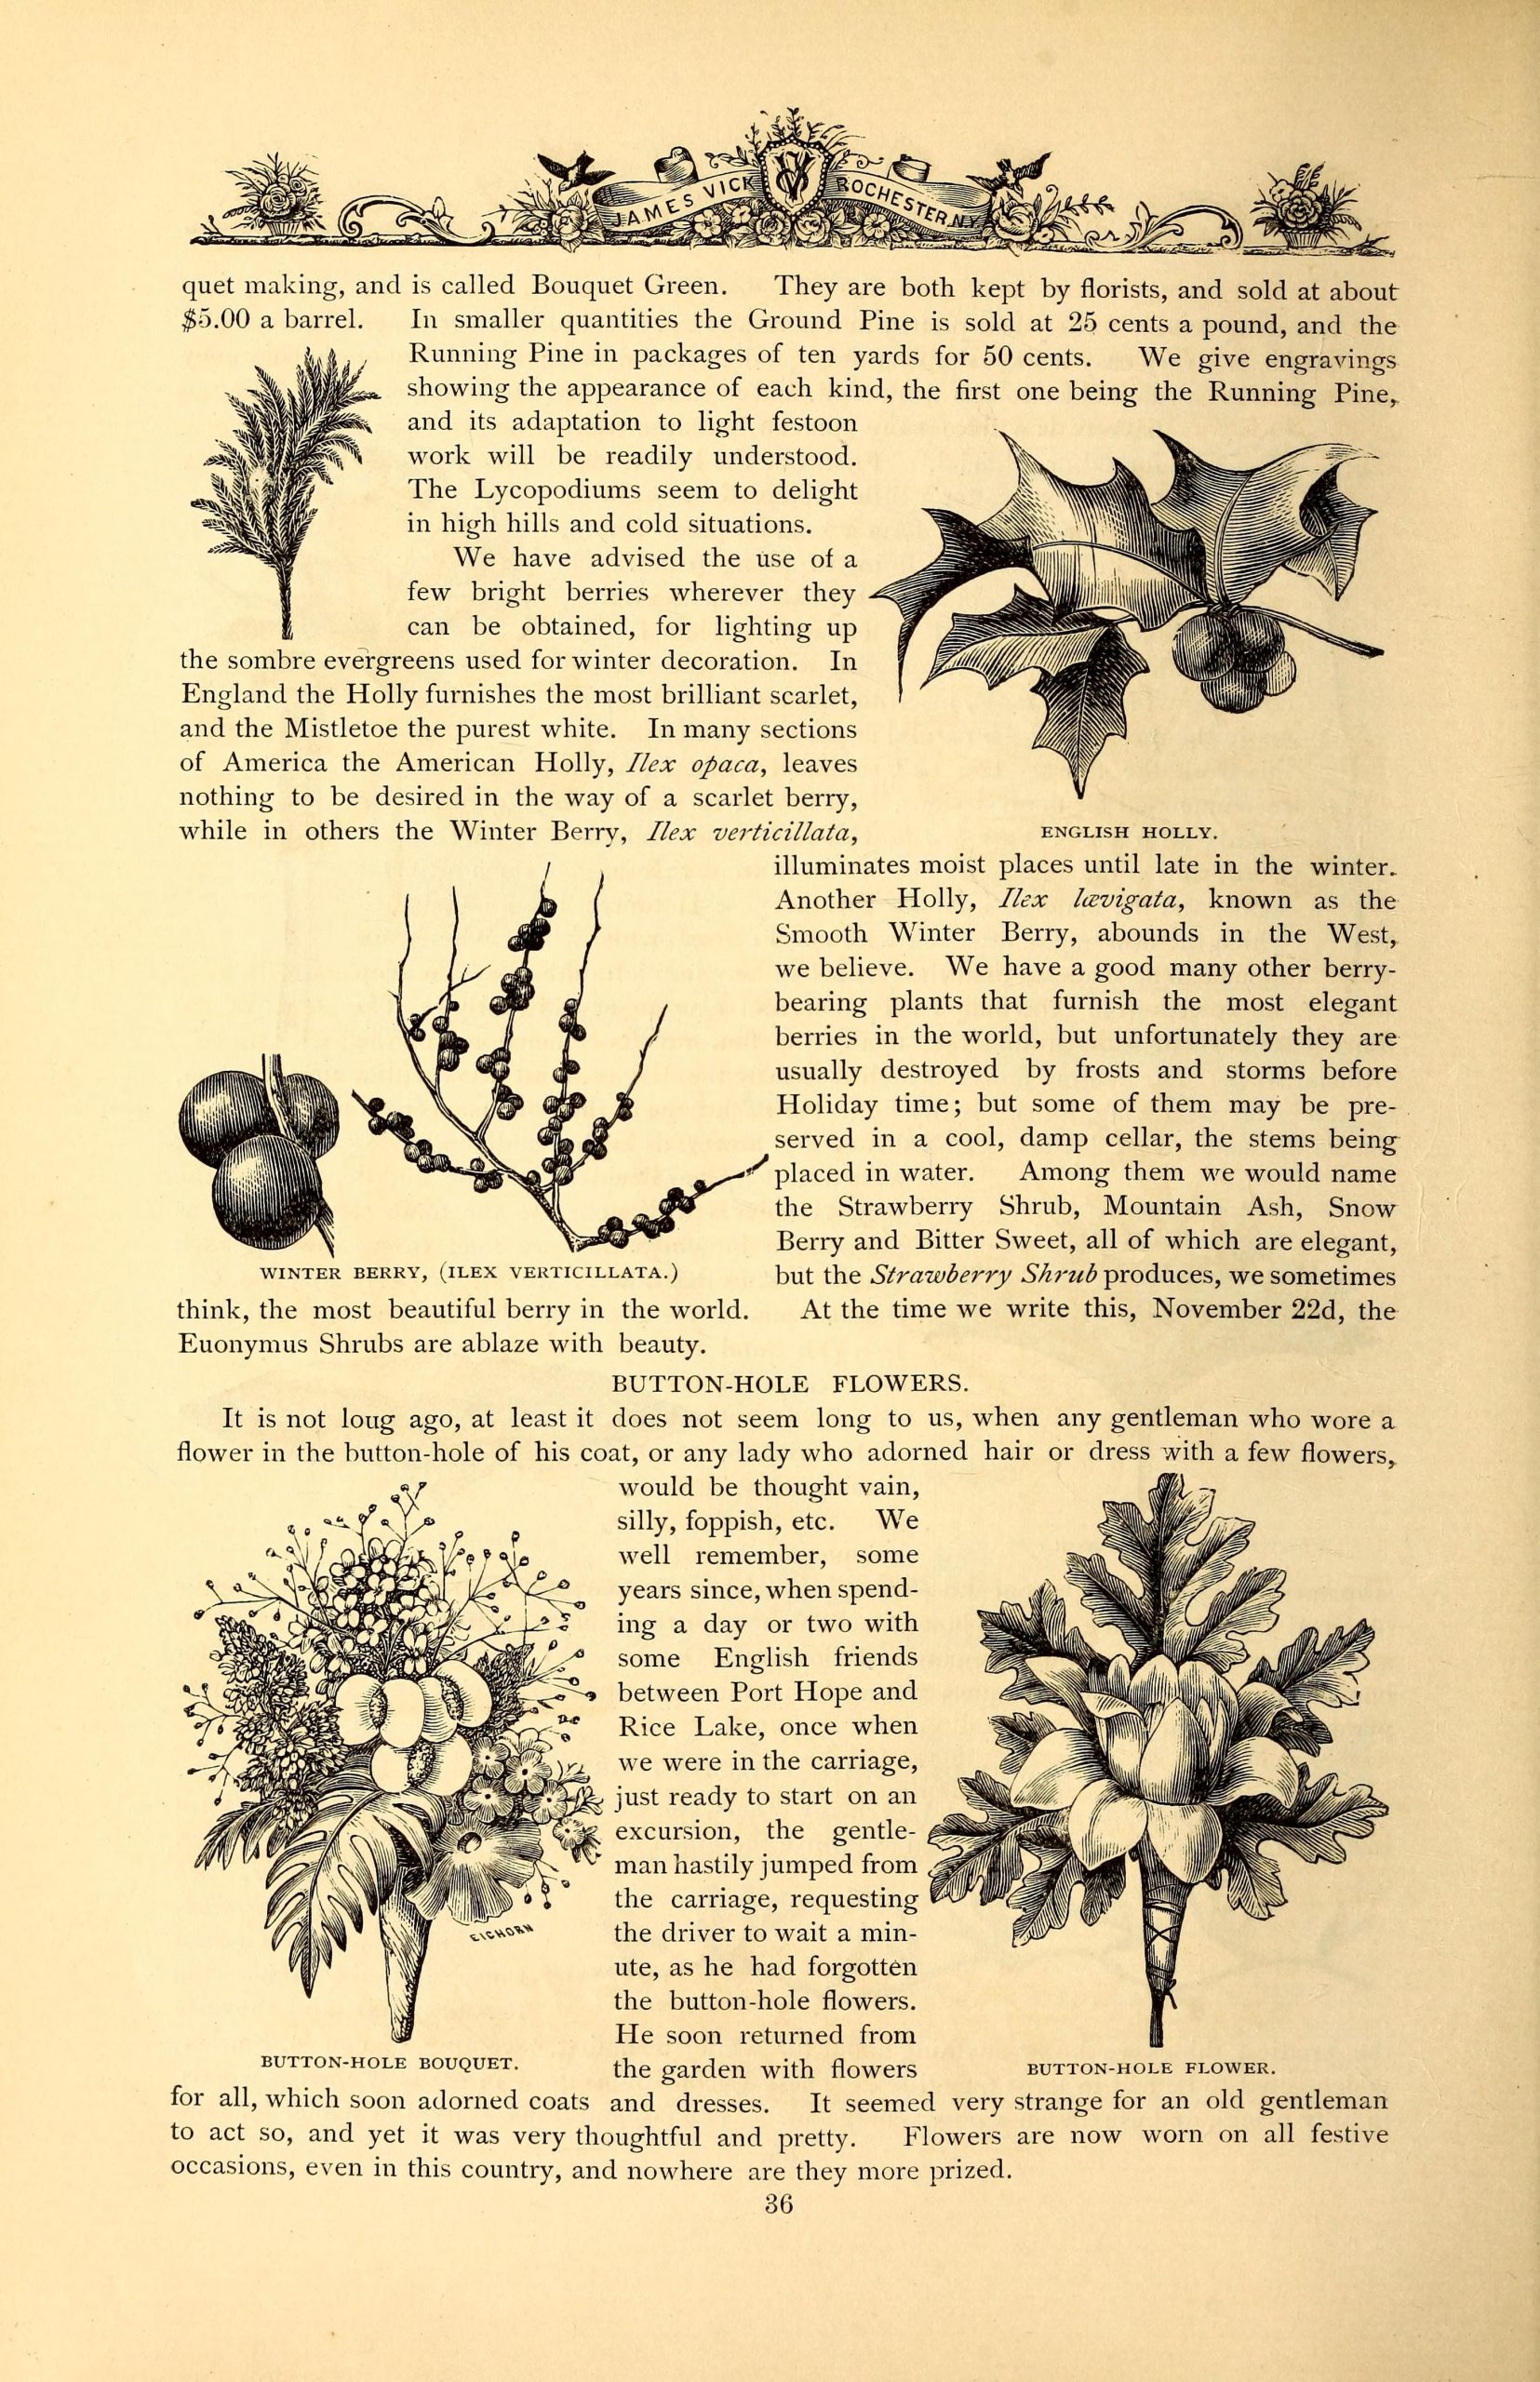 English Holly, Winter Berry (Ilex verticillata), Button-hole Bouquet, and Button-hole Flower